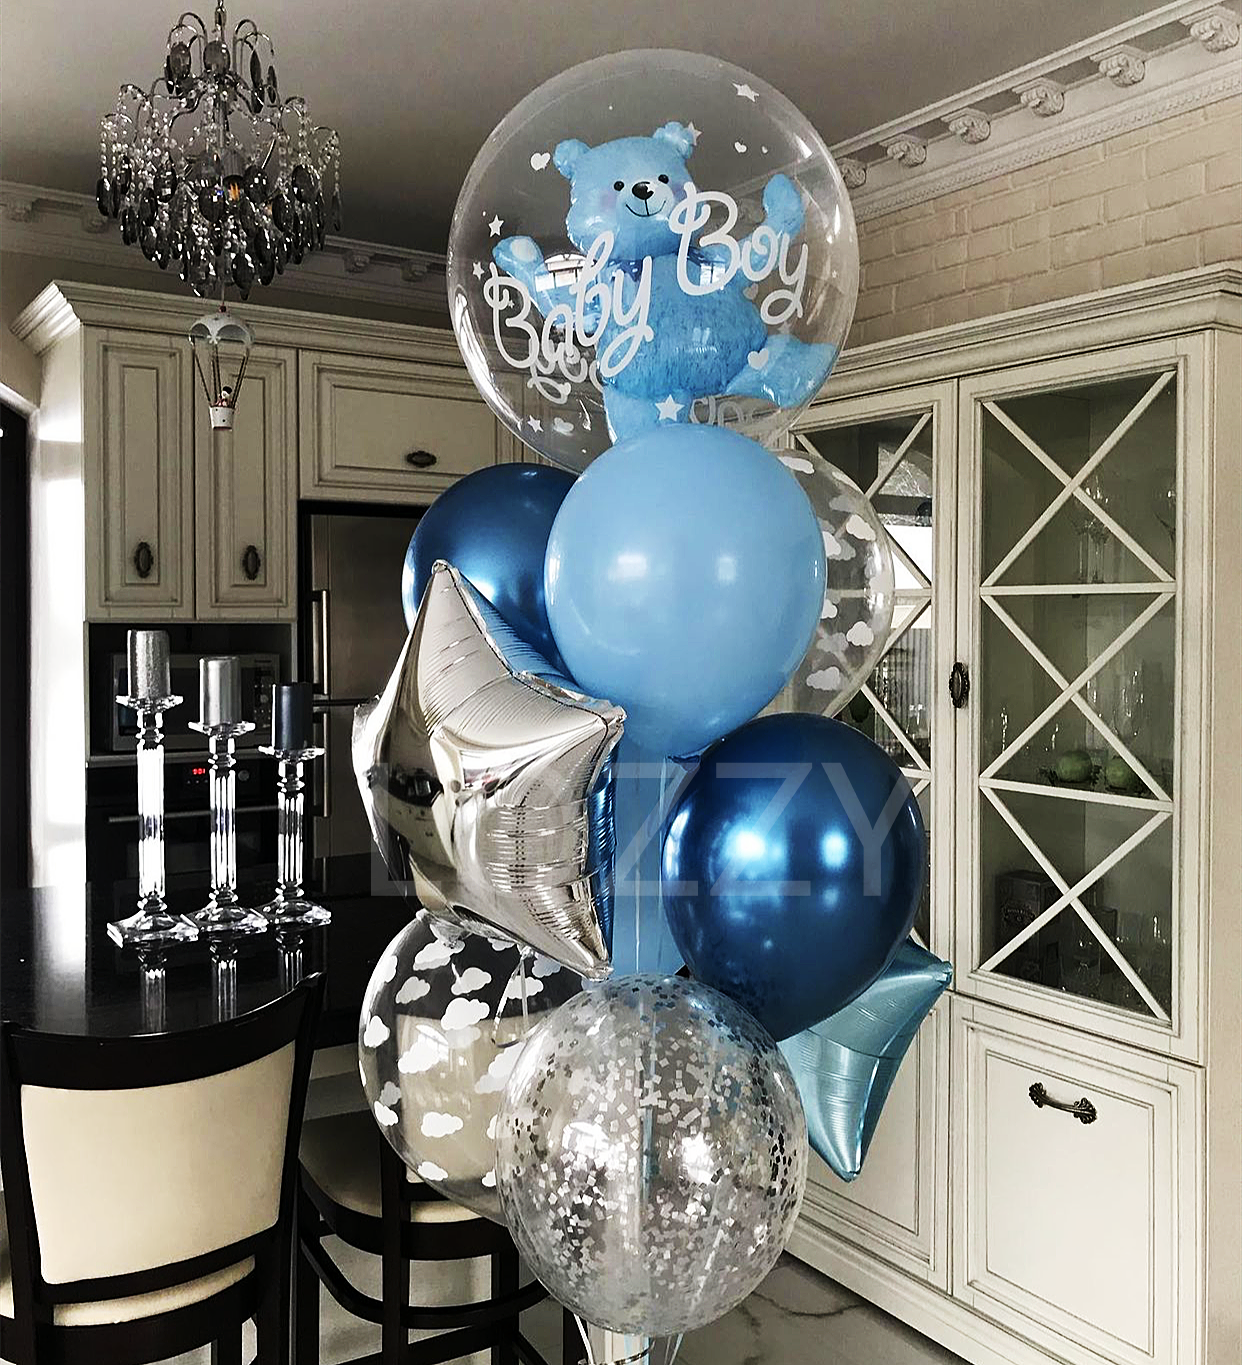 Bubble bear aluminum foil balloon decorations